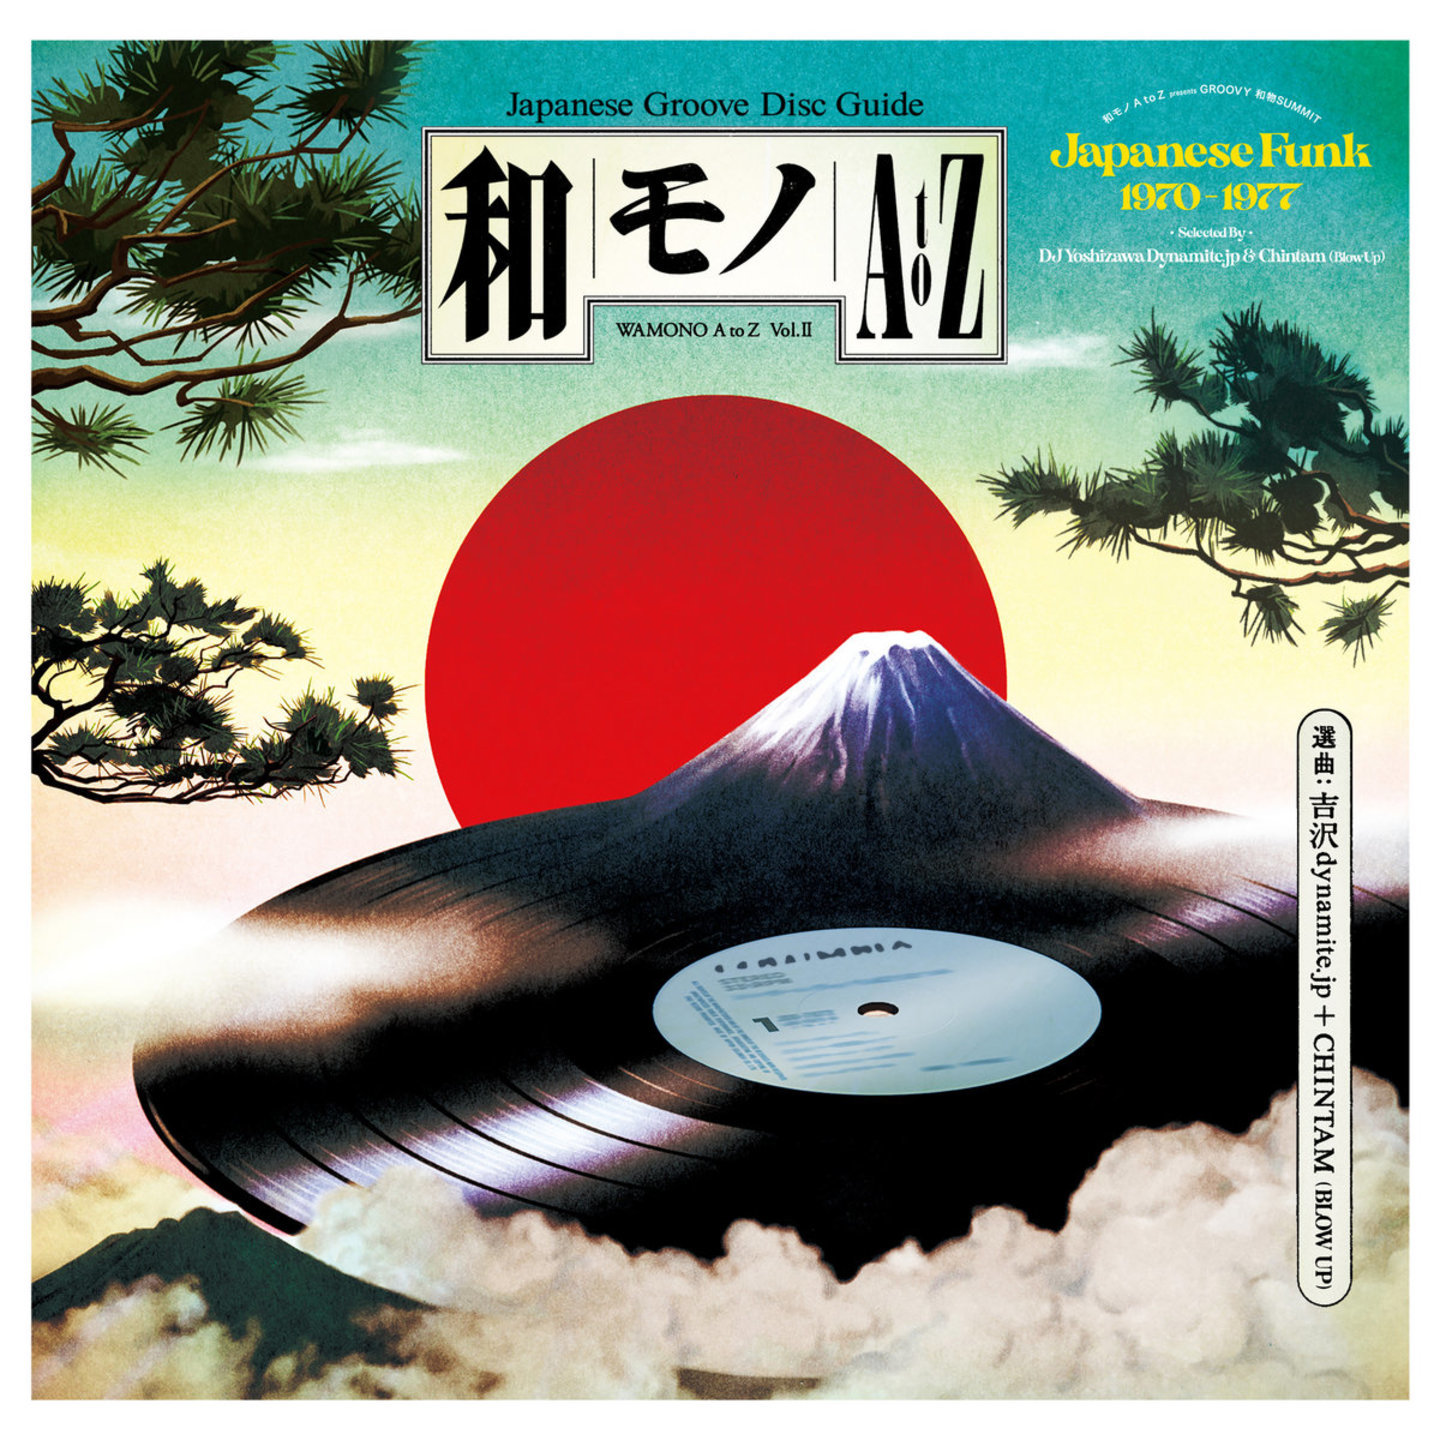 V/A - Wamono A to Z Vol II: Japanese Funk 1970-1977 LP (180gram vinyl)